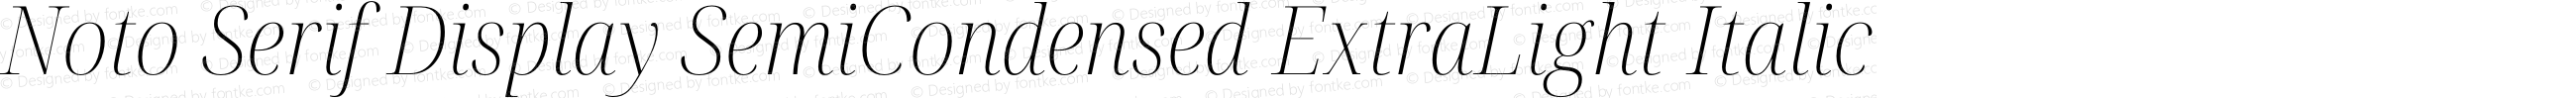 Noto Serif Display SemiCondensed ExtraLight Italic